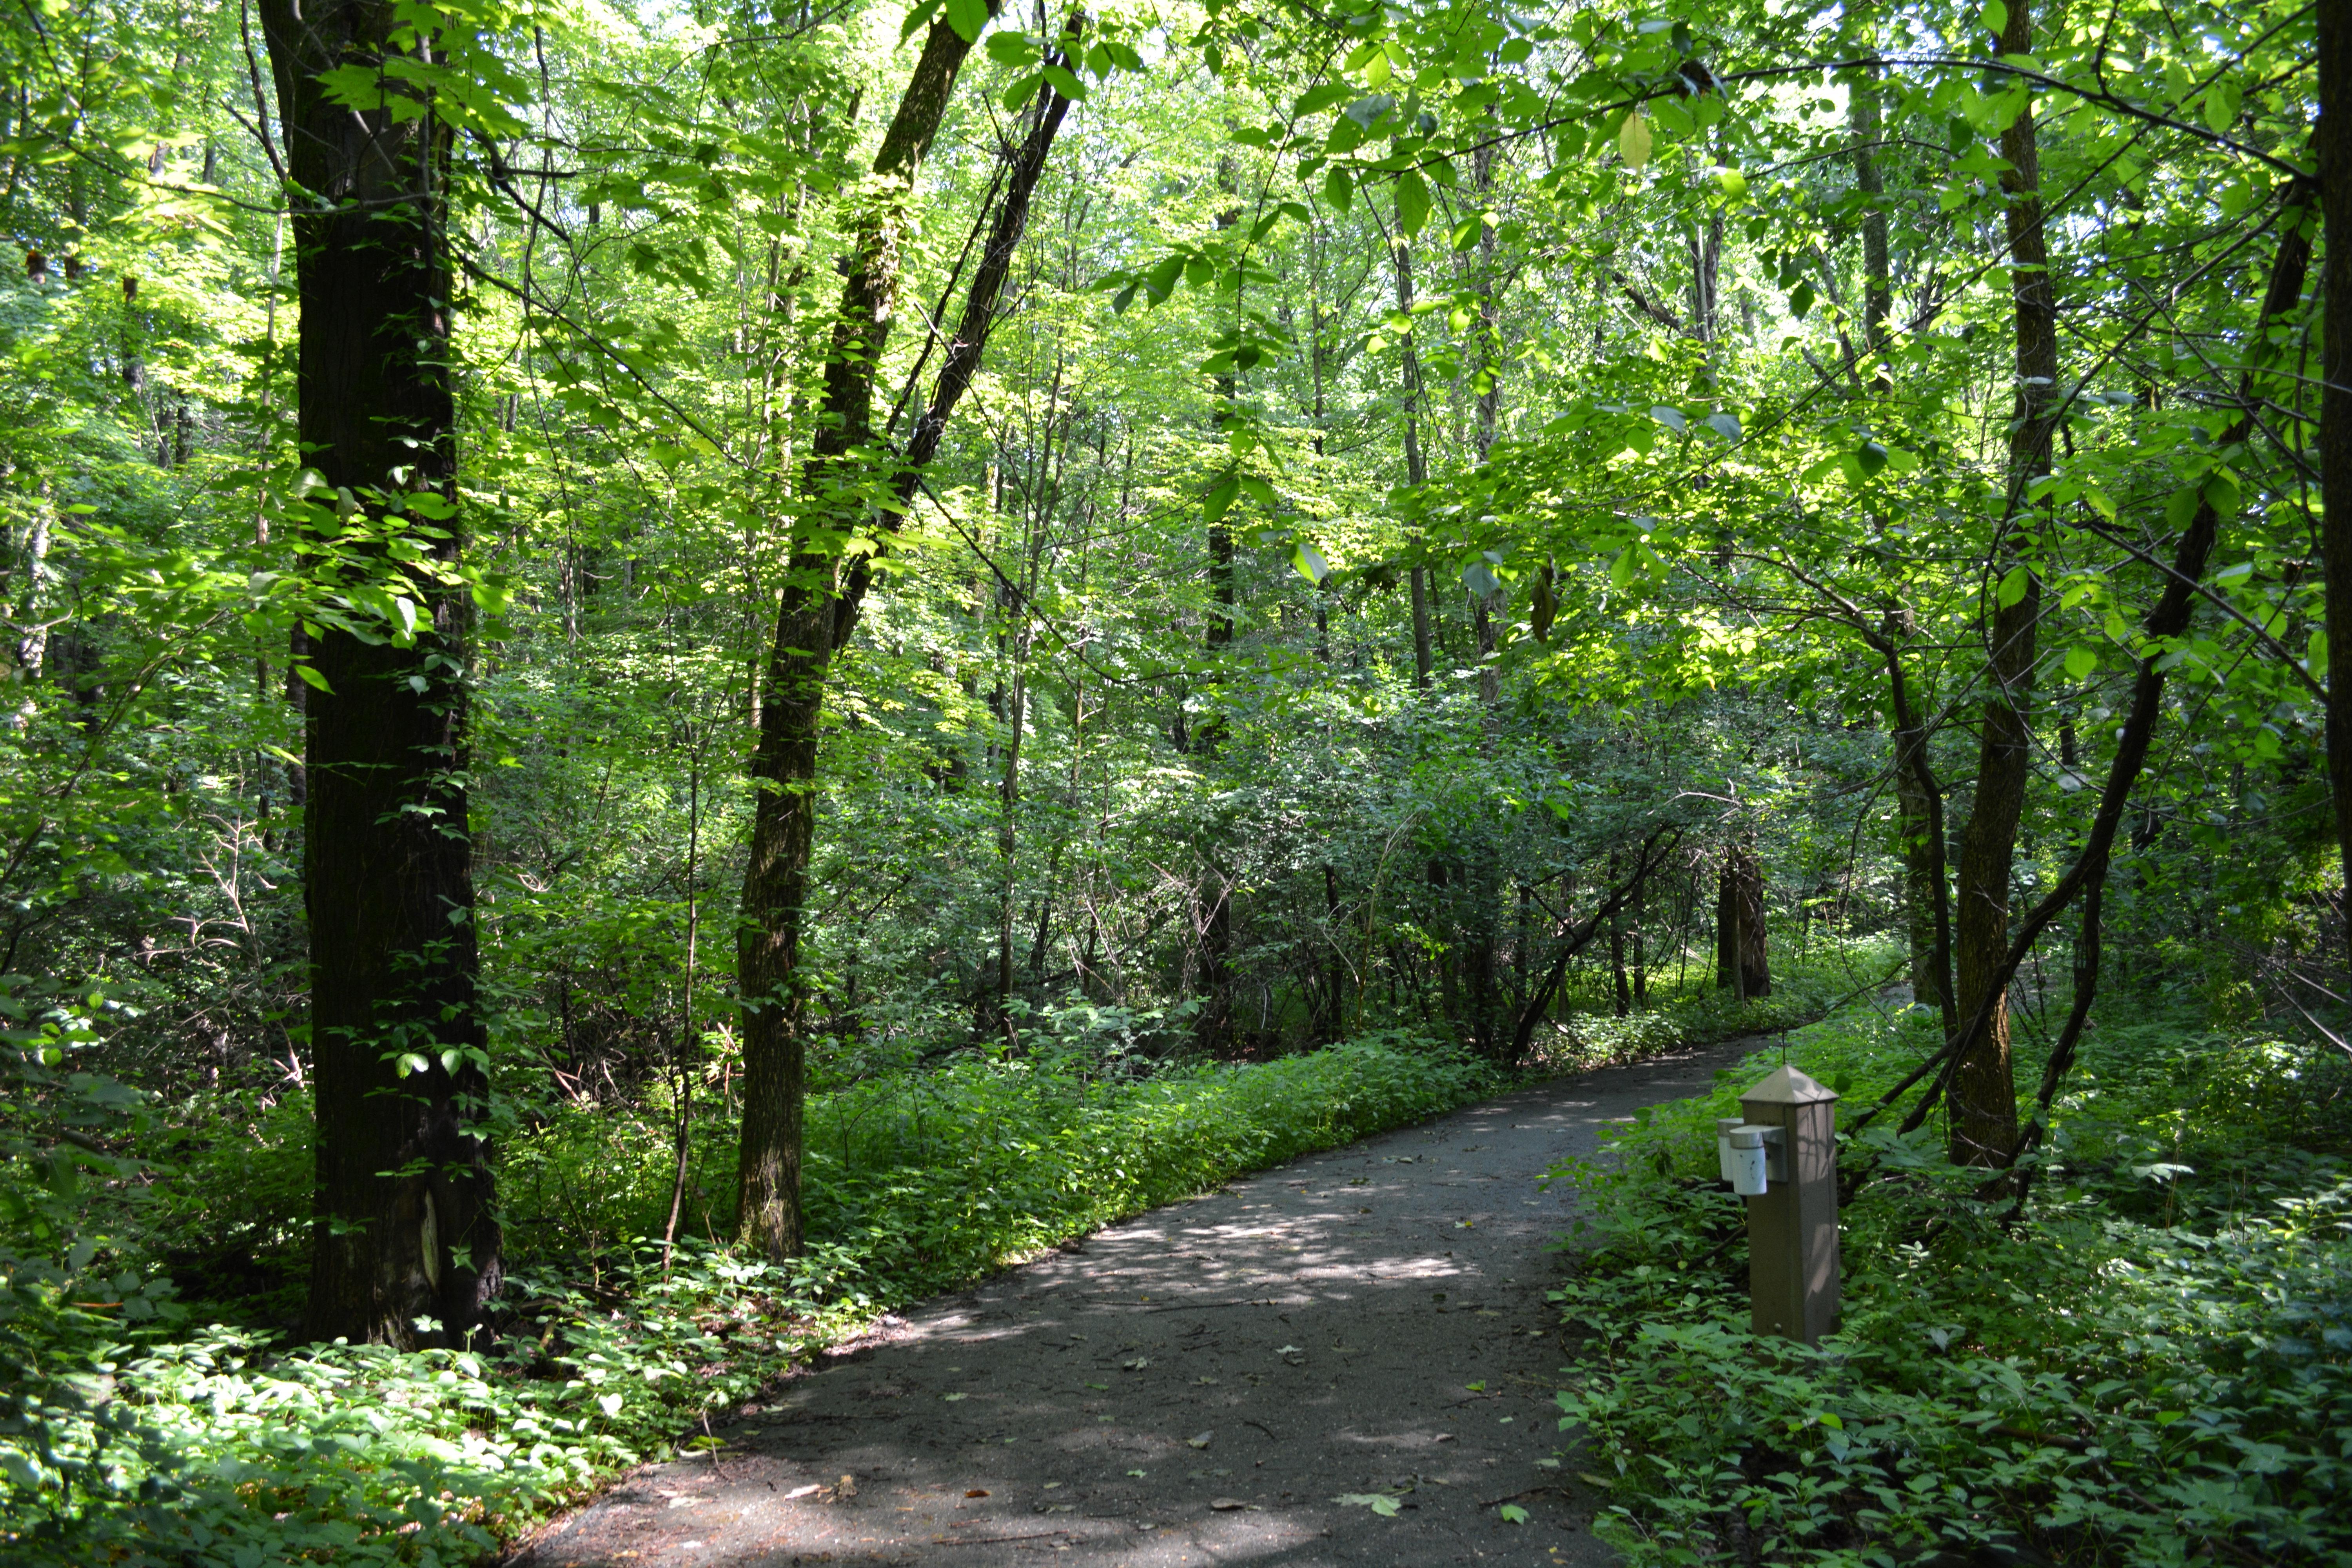 A gravel path through a forest